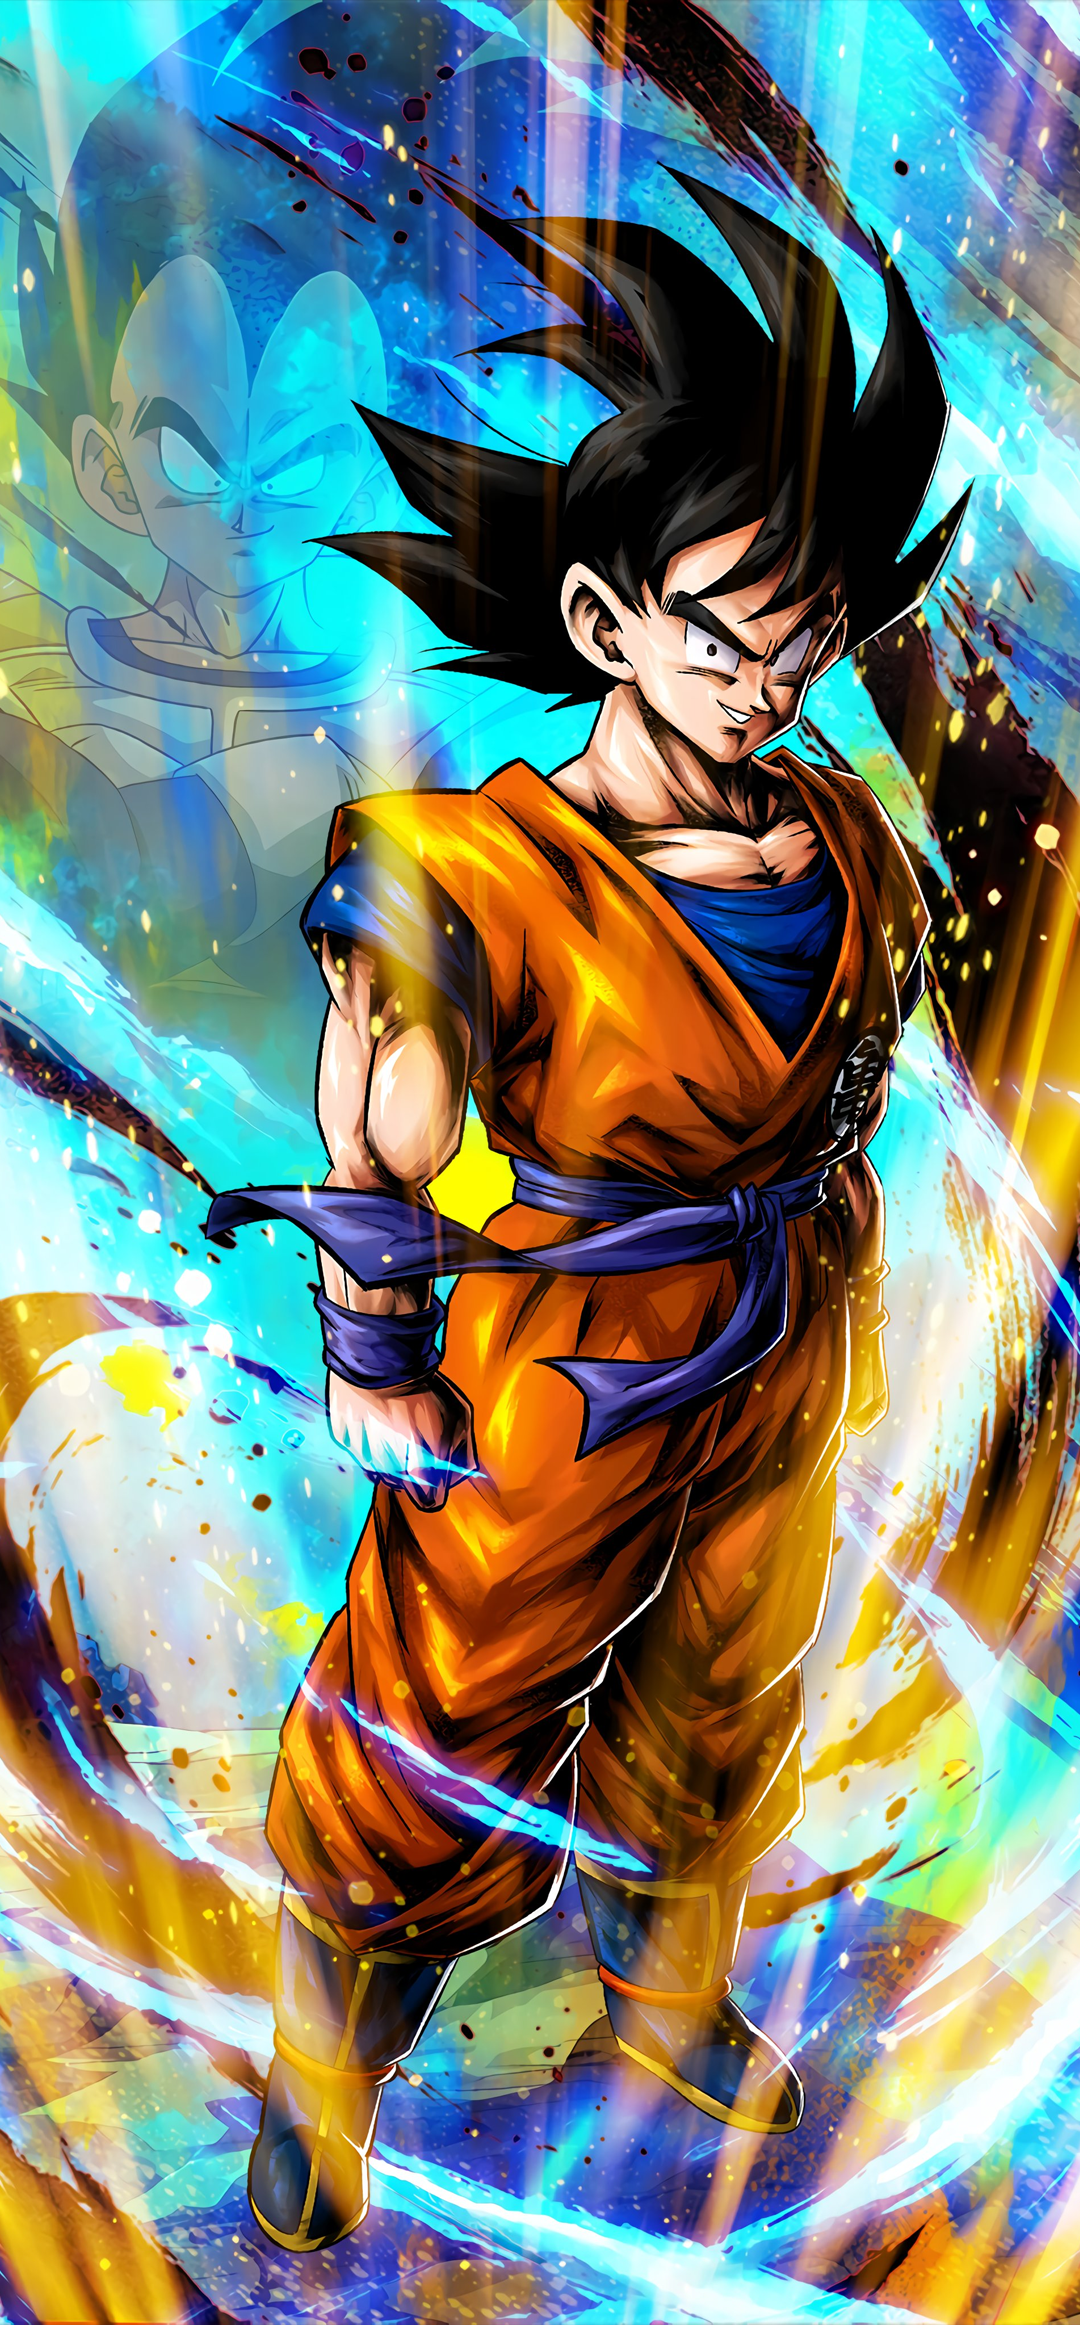 SP Super Saiyan Goku (Red)  Dragon Ball Legends Wiki - GamePress